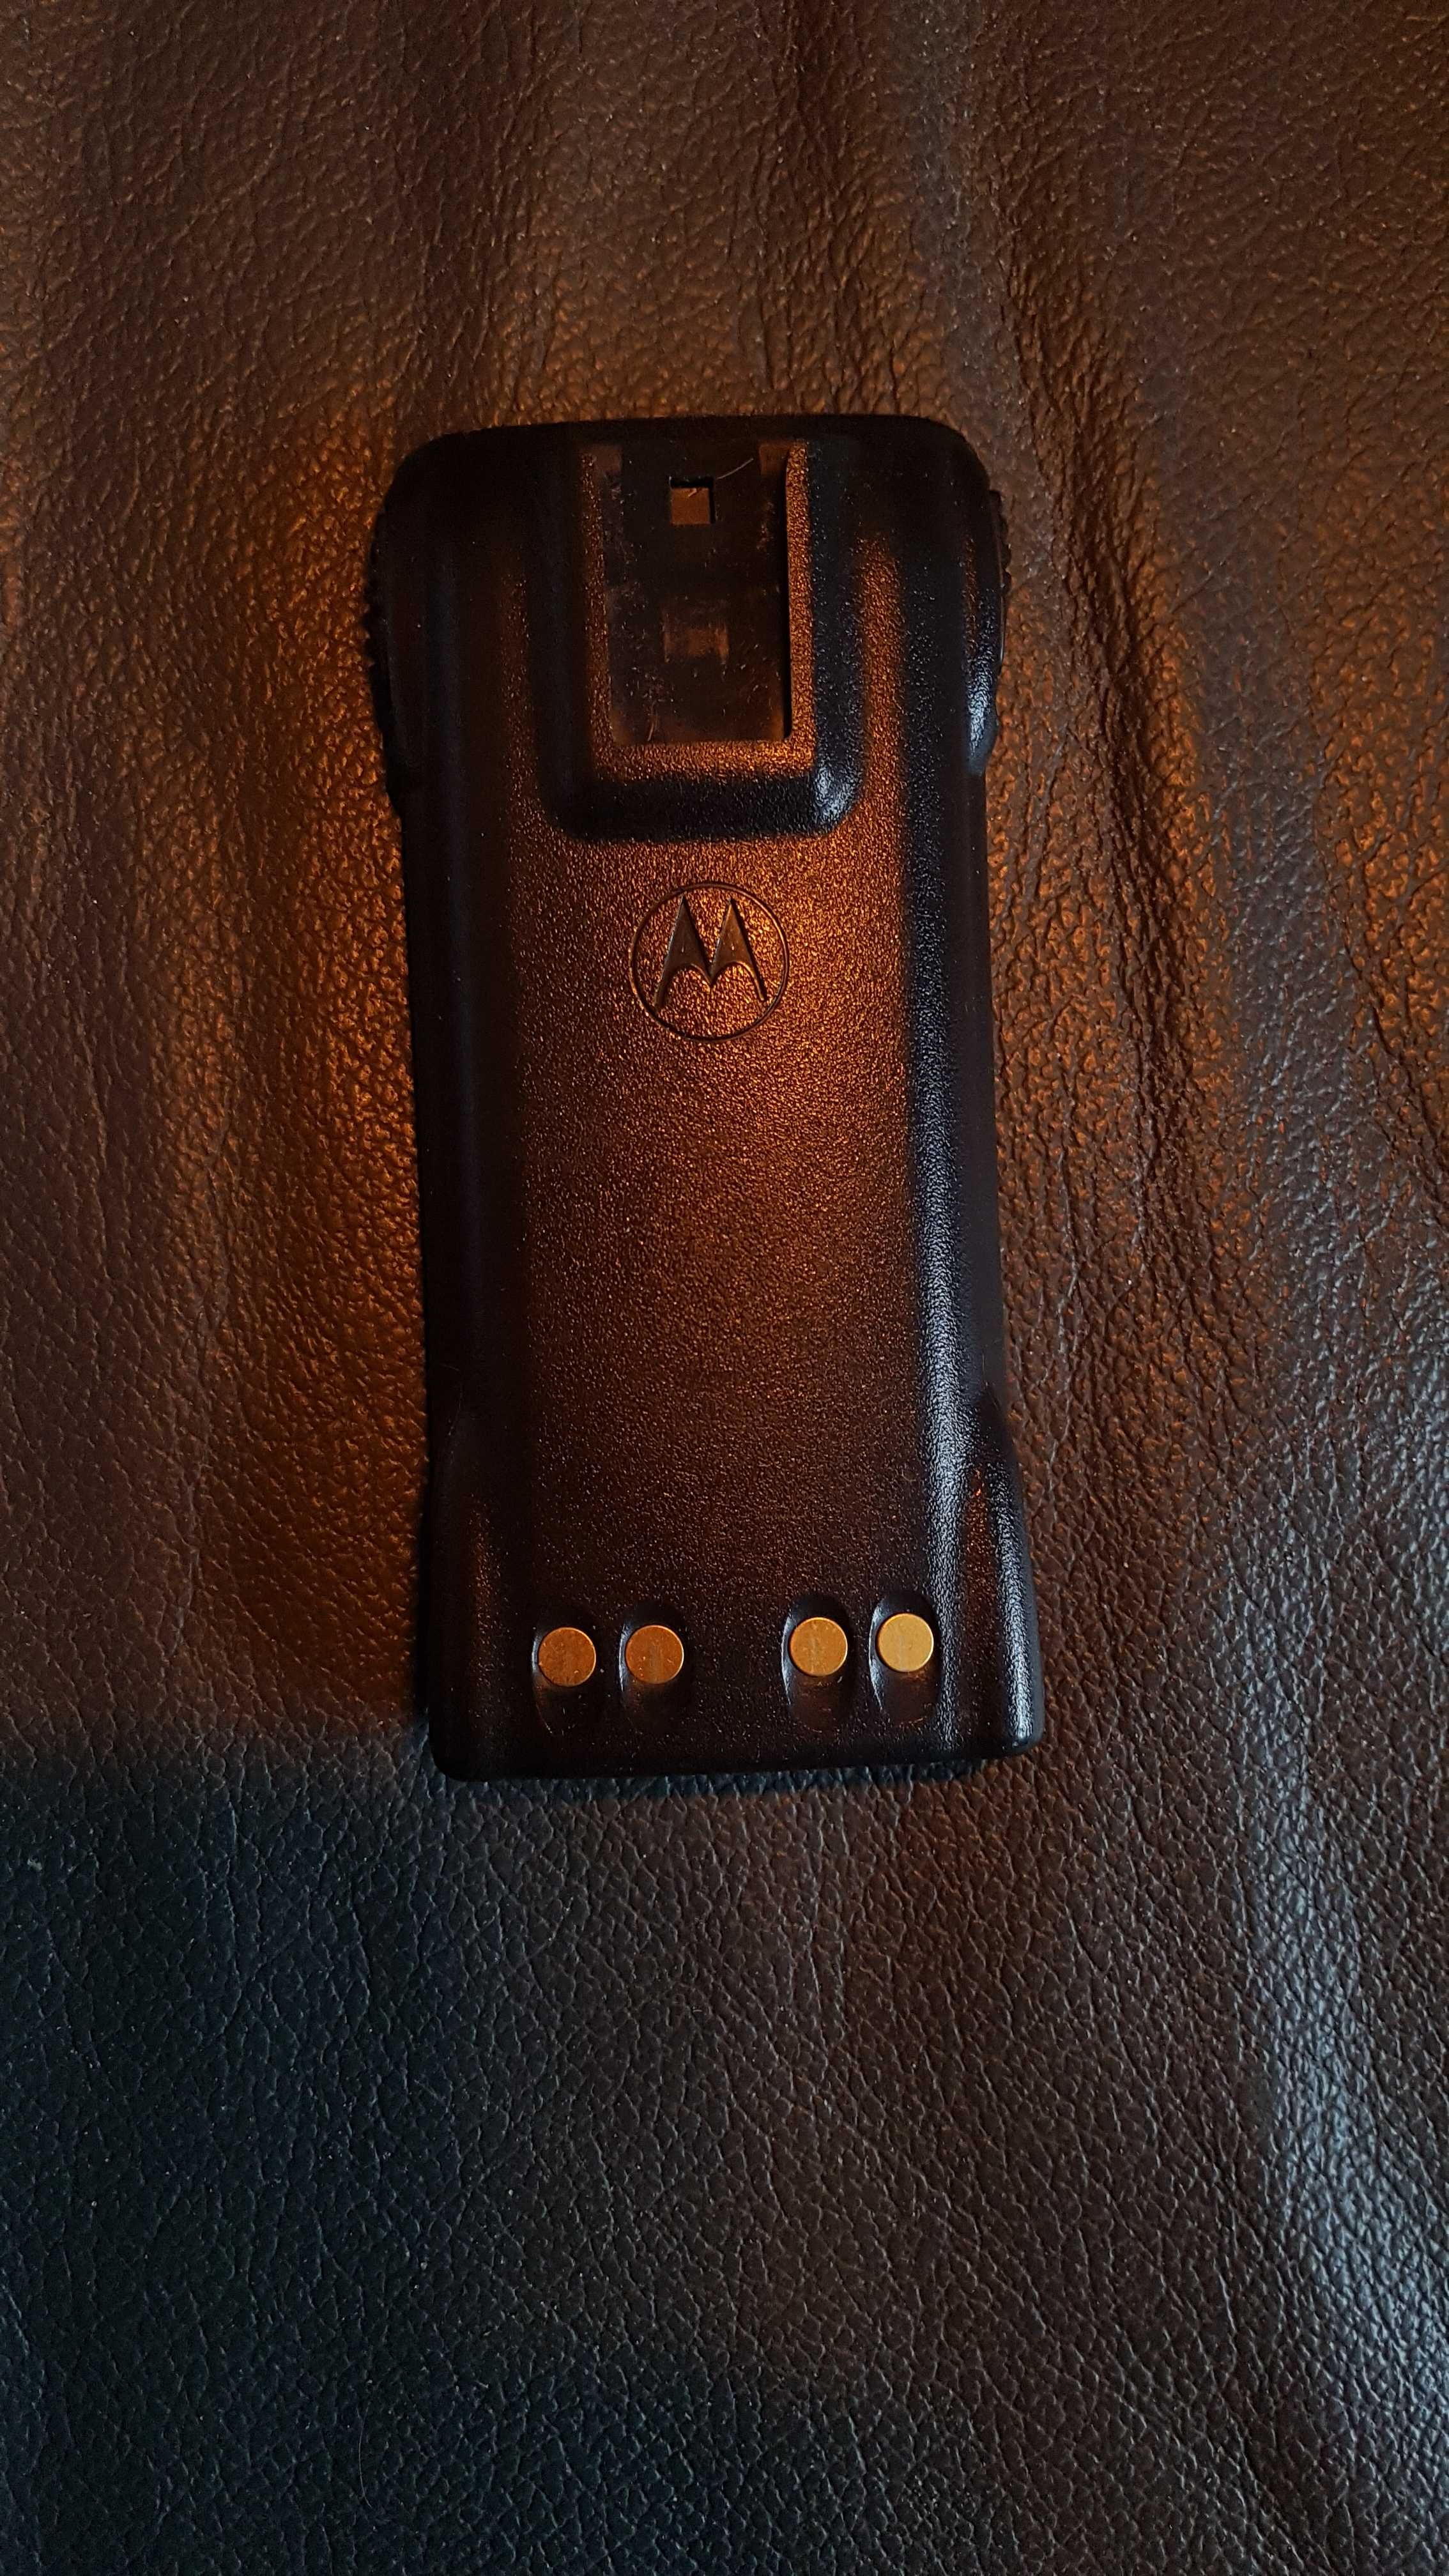 Akumulator Motorola PMNN4151 NiMH 1300mAh